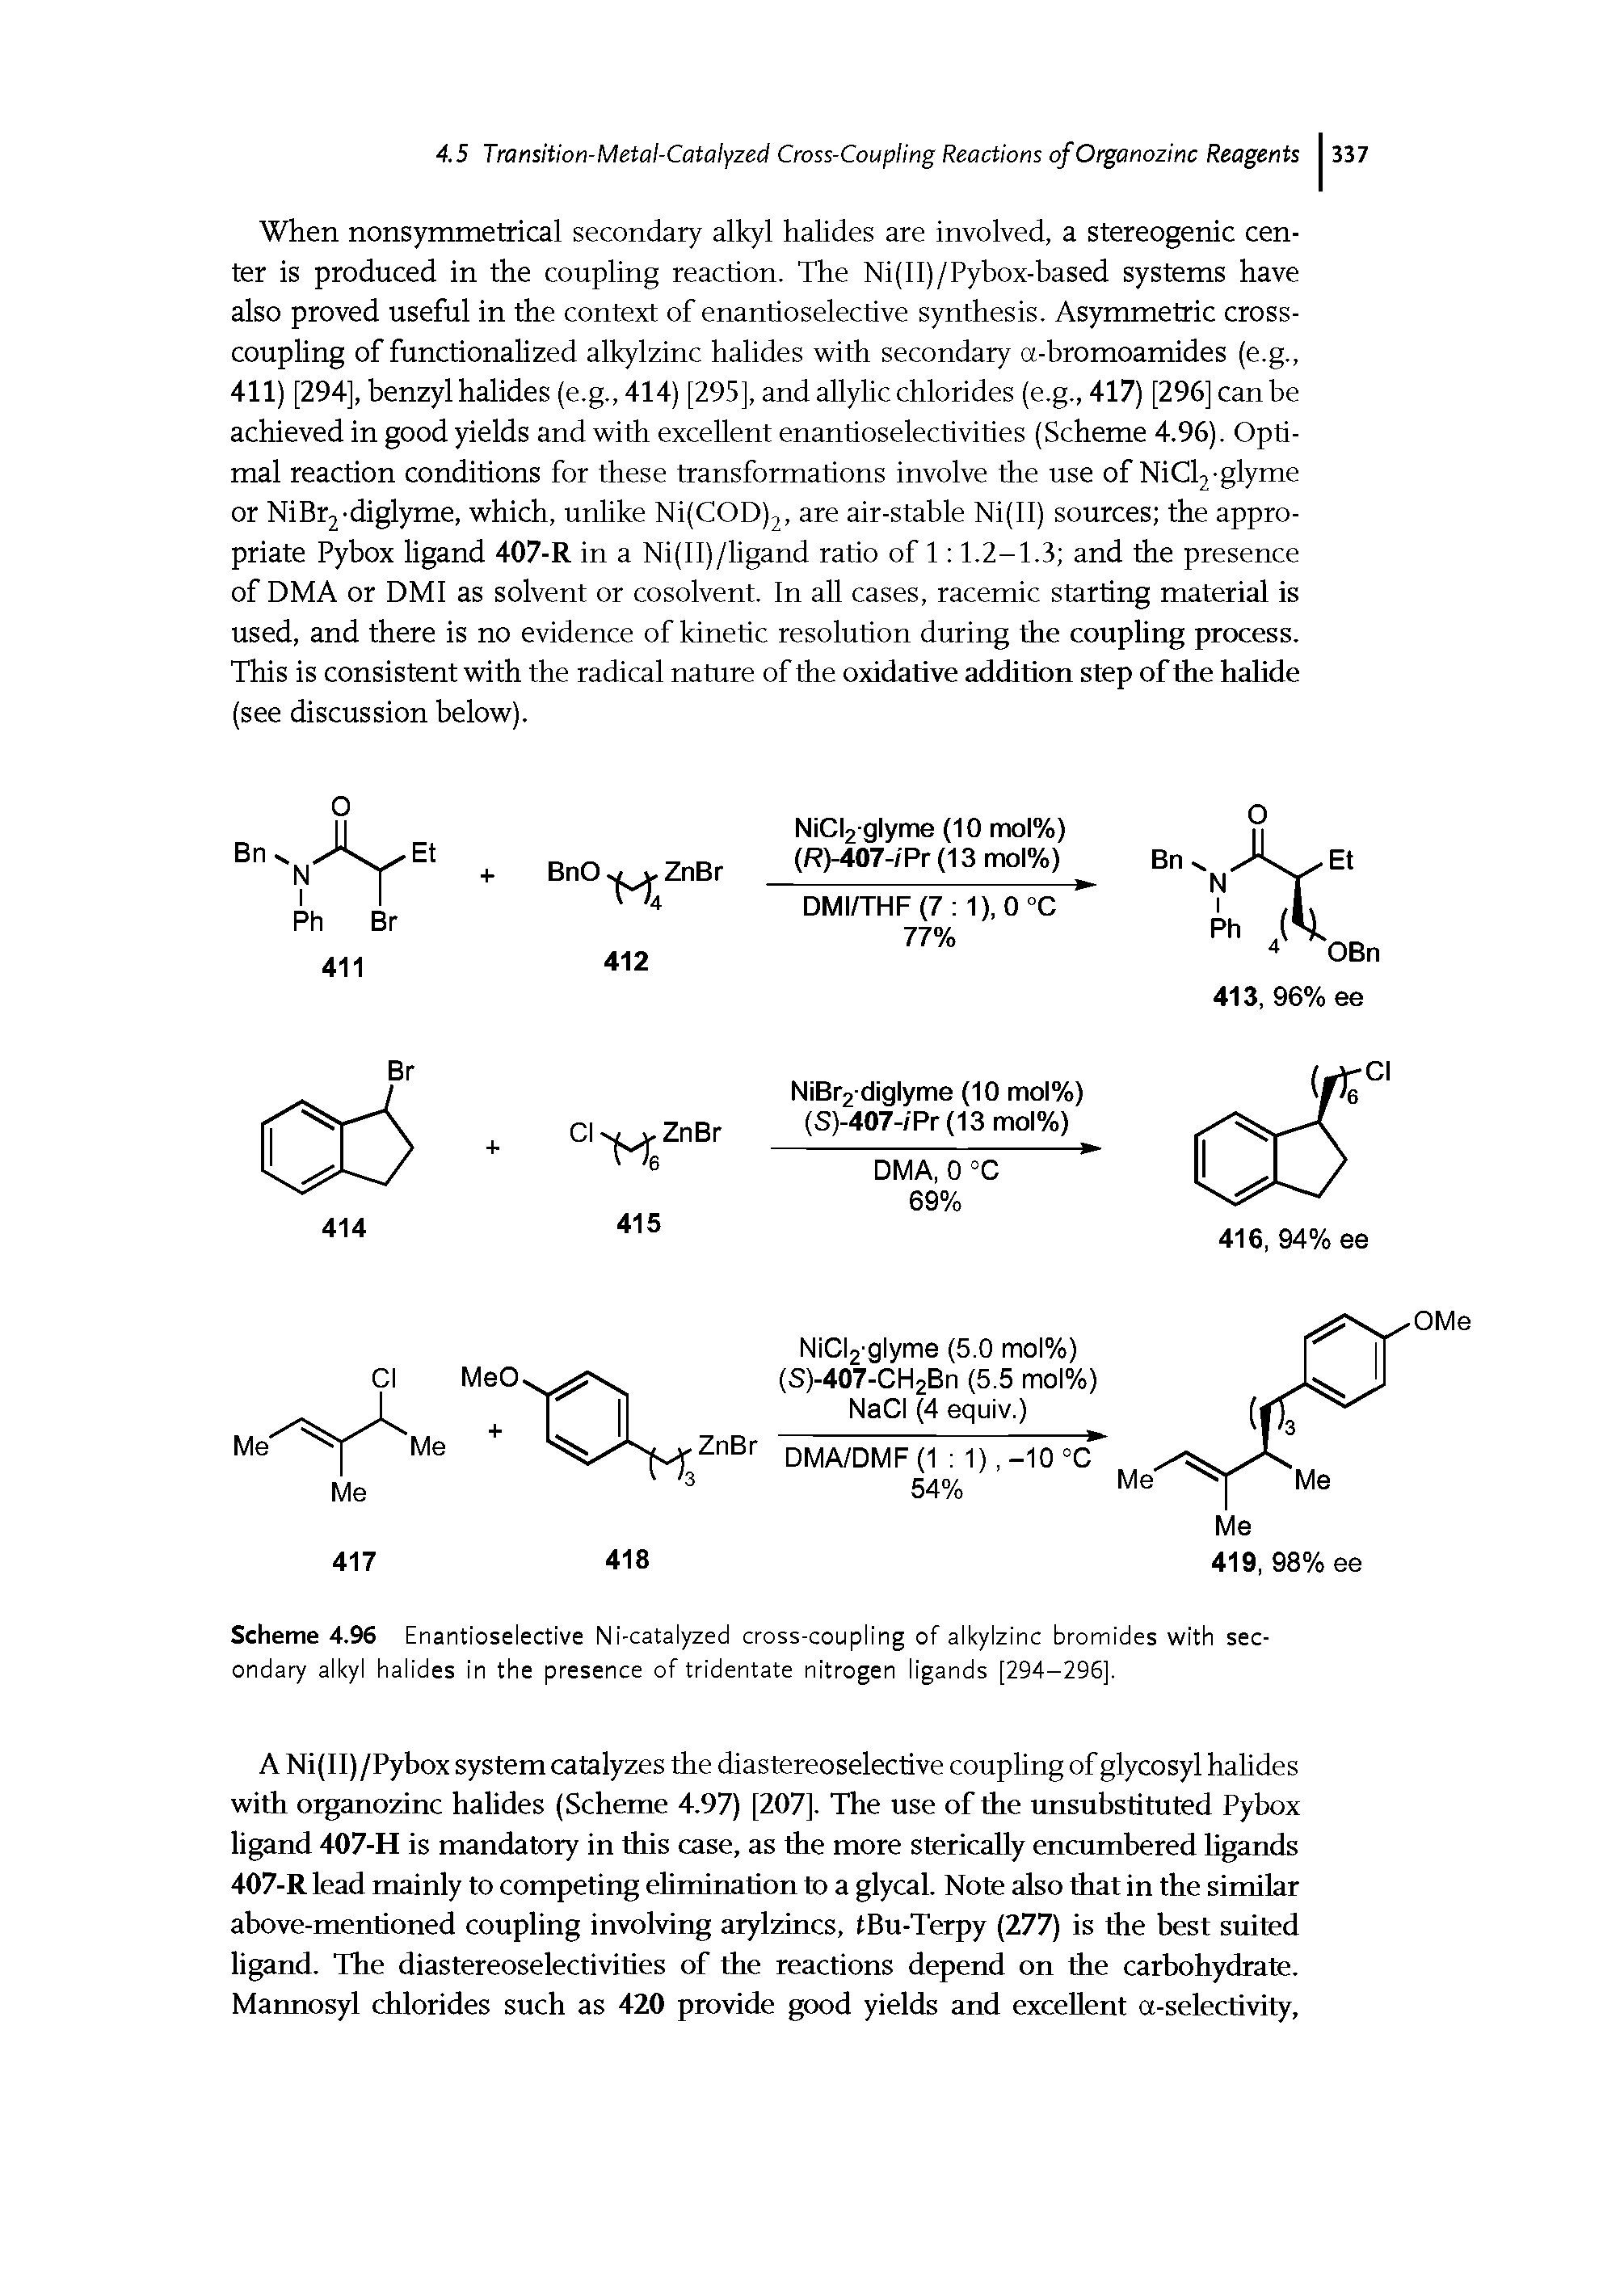 Scheme 4.96 Enantioselective Ni-catalyzed cross-coupling of alkylzinc bromides with sec-onda7 alkyl halides in the presence of tridentate nitrogen ligands [294-296].